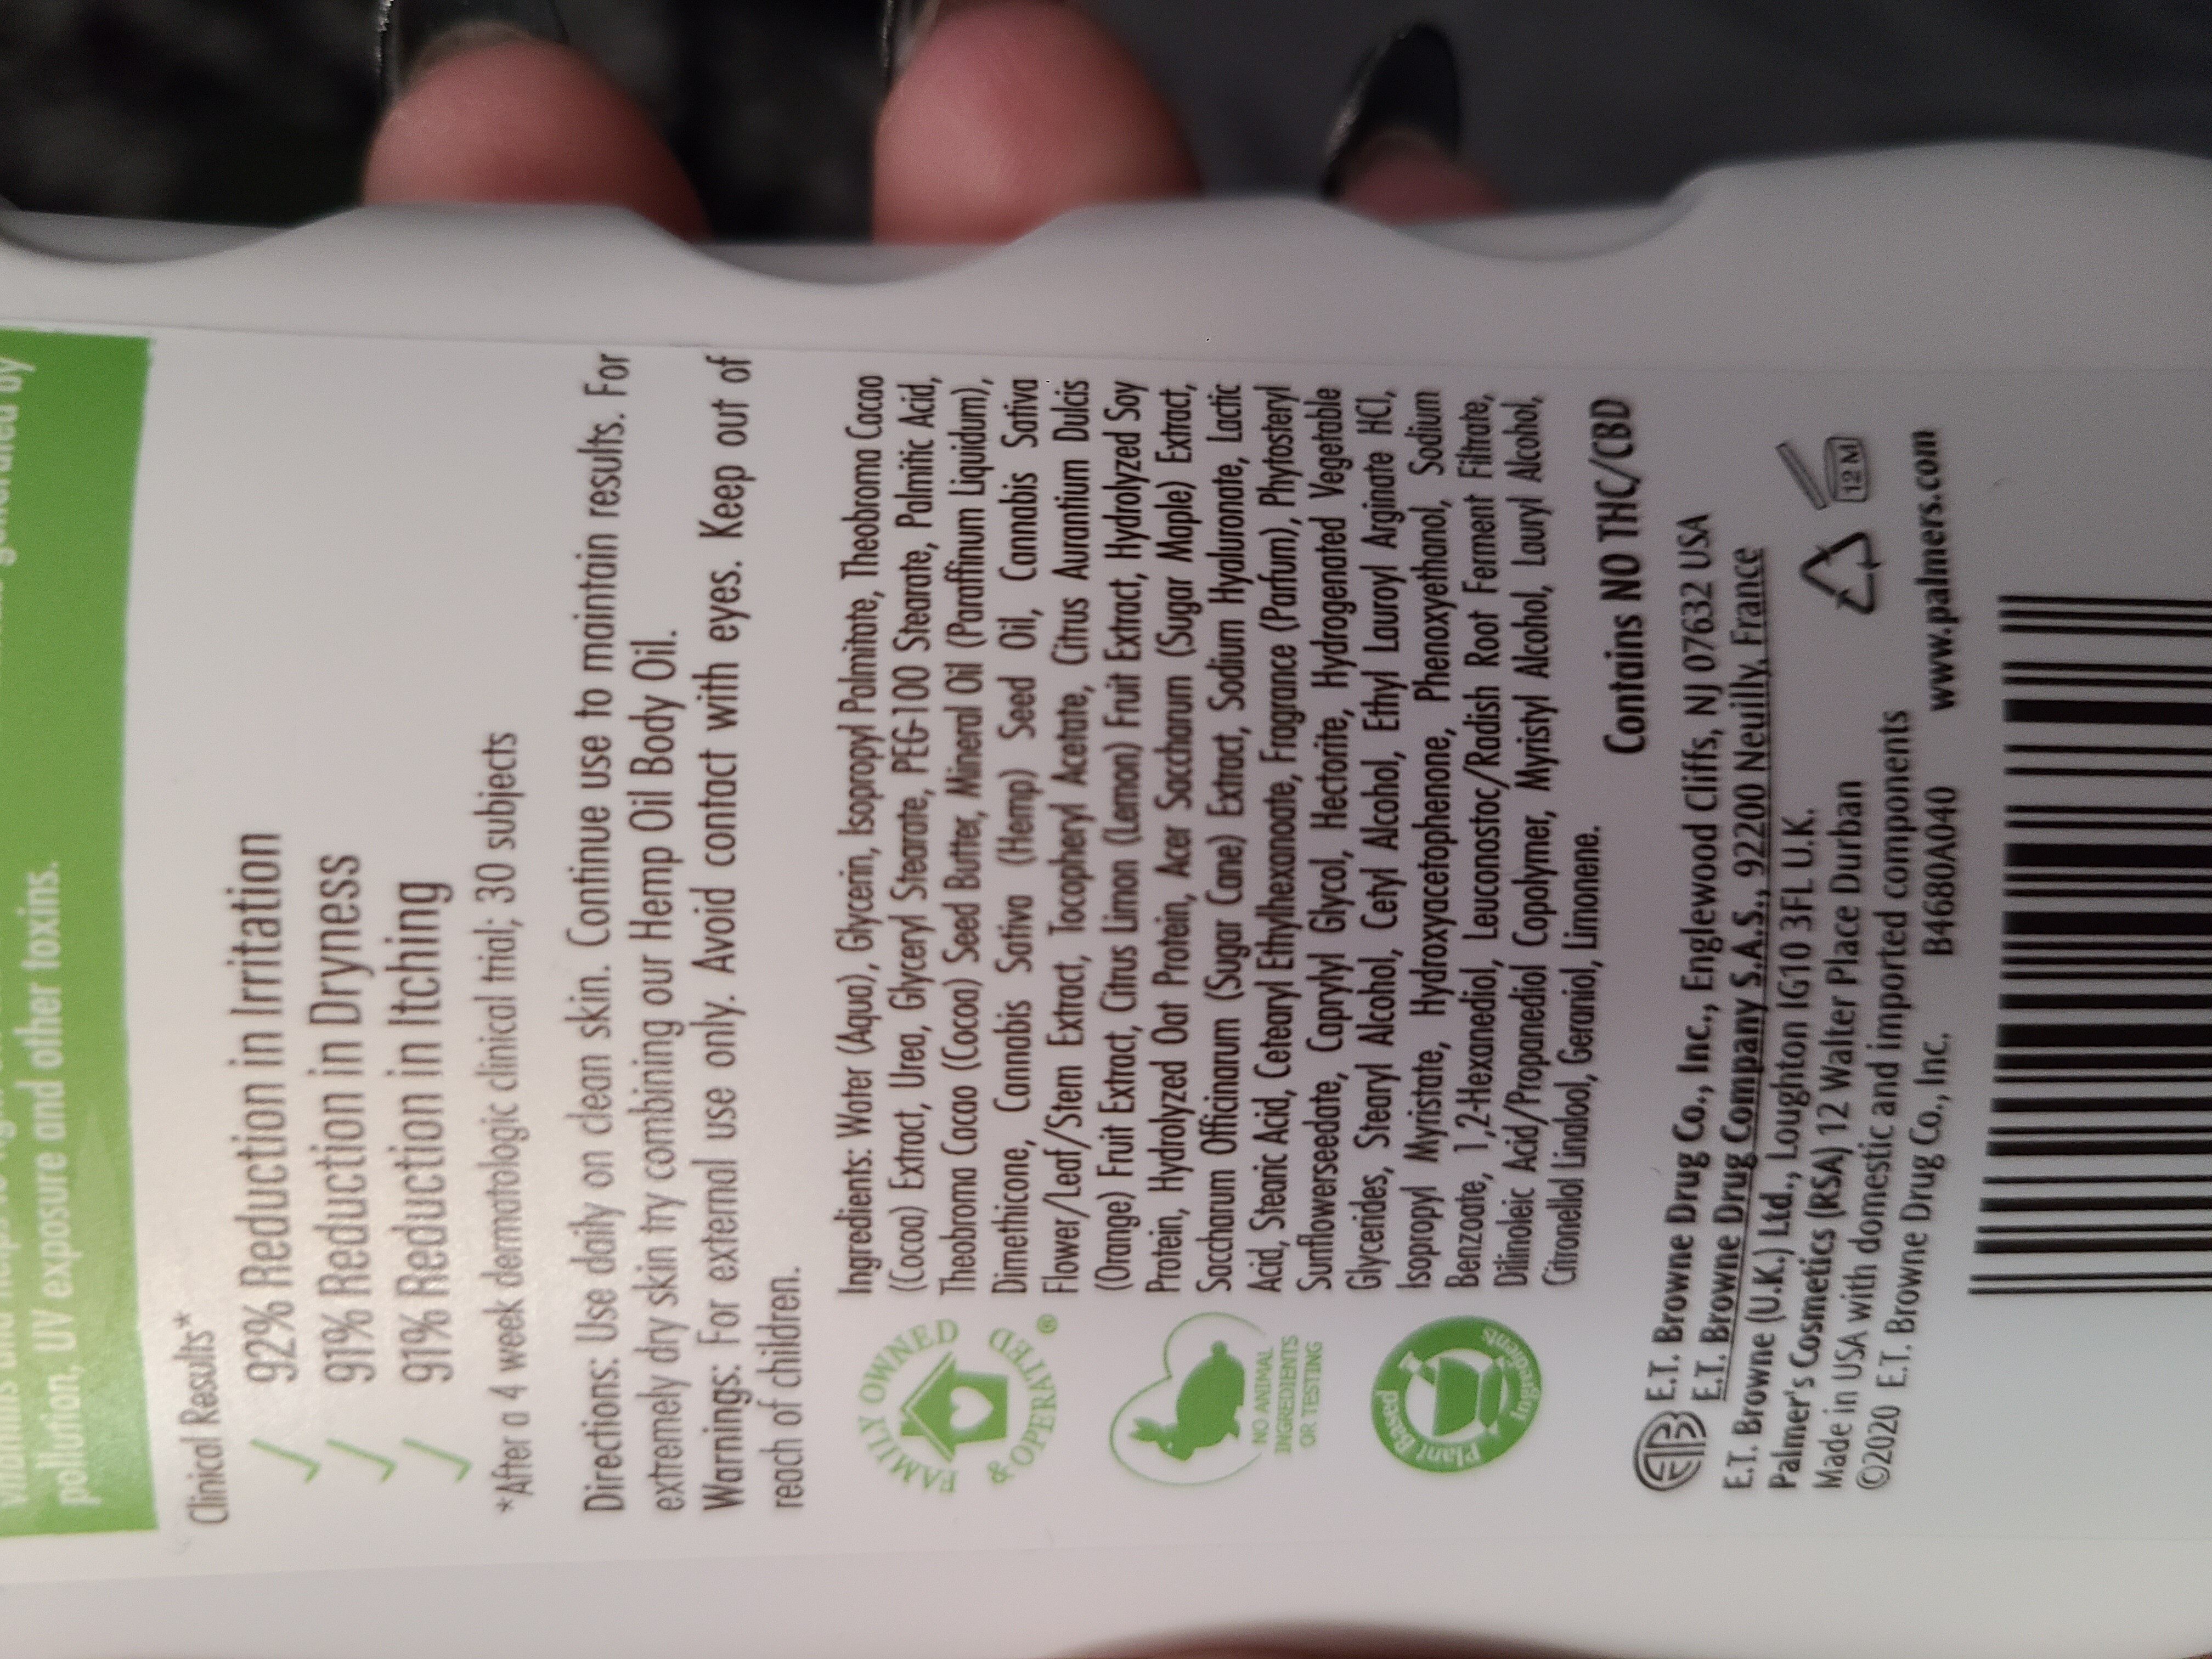 palmers hemp oil relief body lotion - Inhaltsstoffe - en